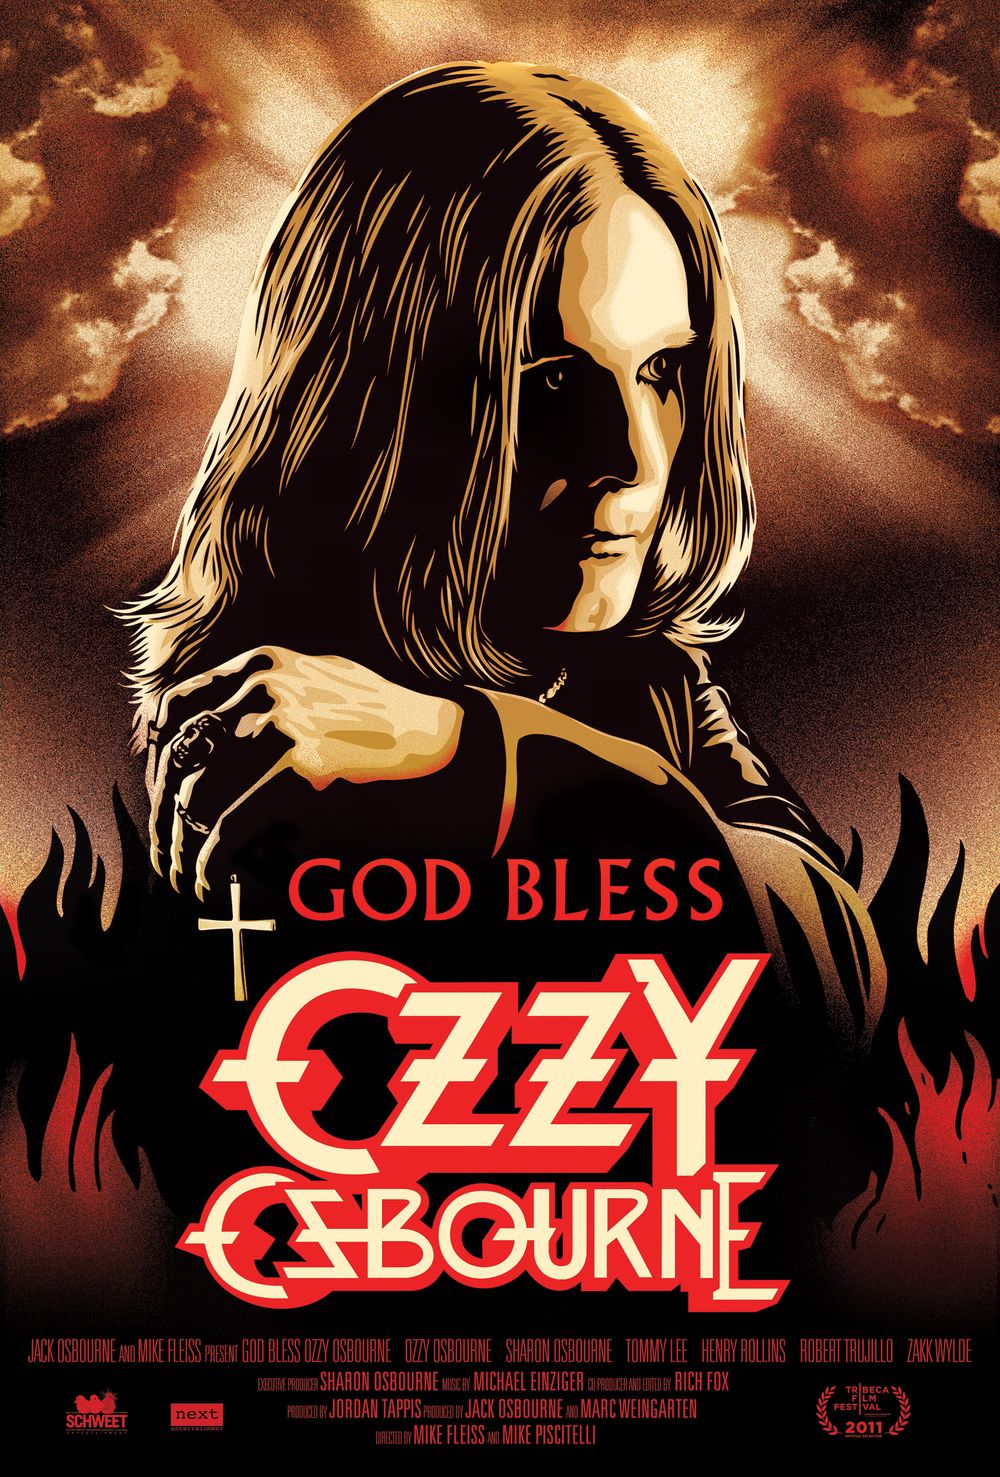 OZZY OSBOURNE - God Bless Ozzy Osbourne cover 